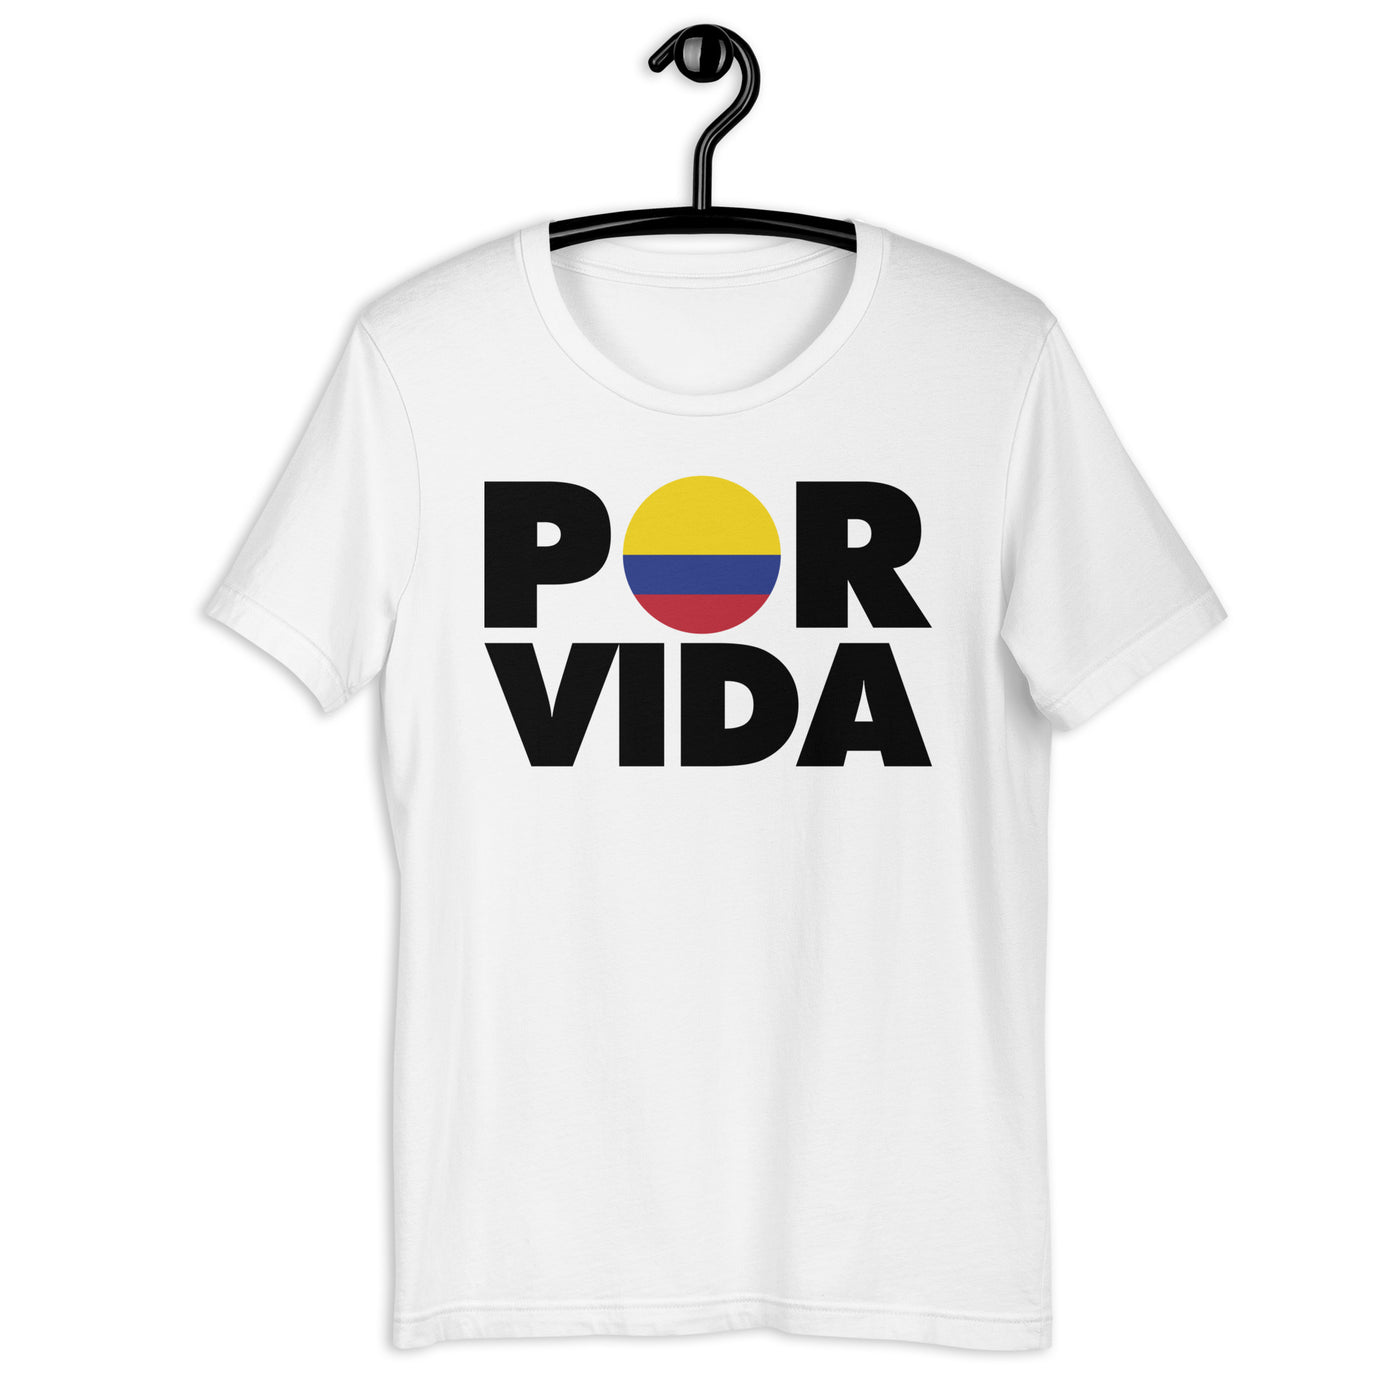 POR VIDA Colombia (Black Text) Unisex t-shirt